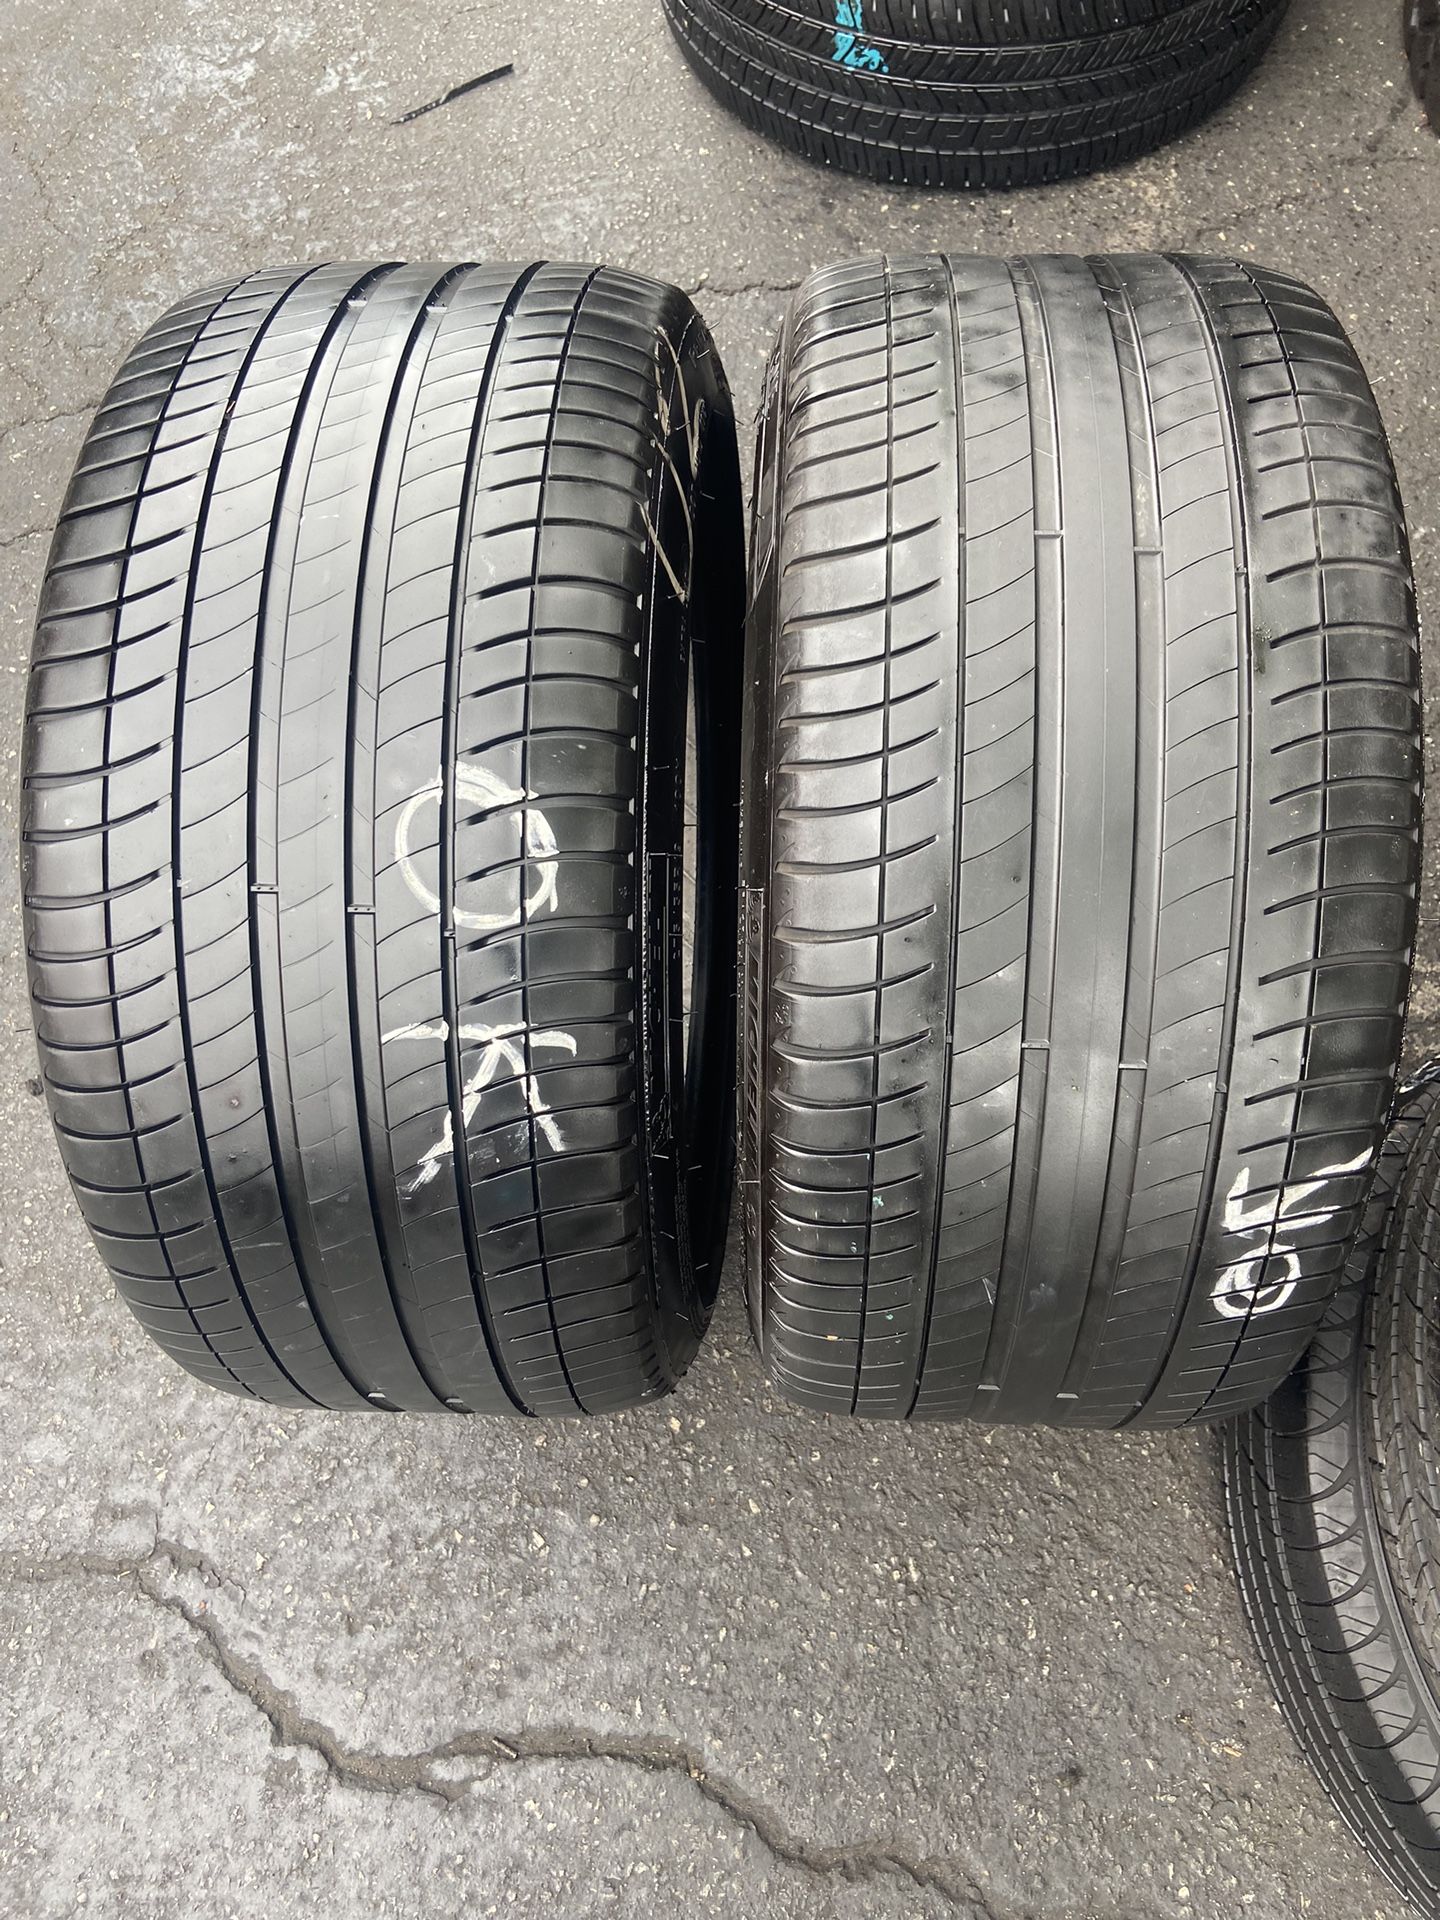 Michelin Primacy Tires 275-35-19 Good Condition Free Installation Se Habla Español $140 2